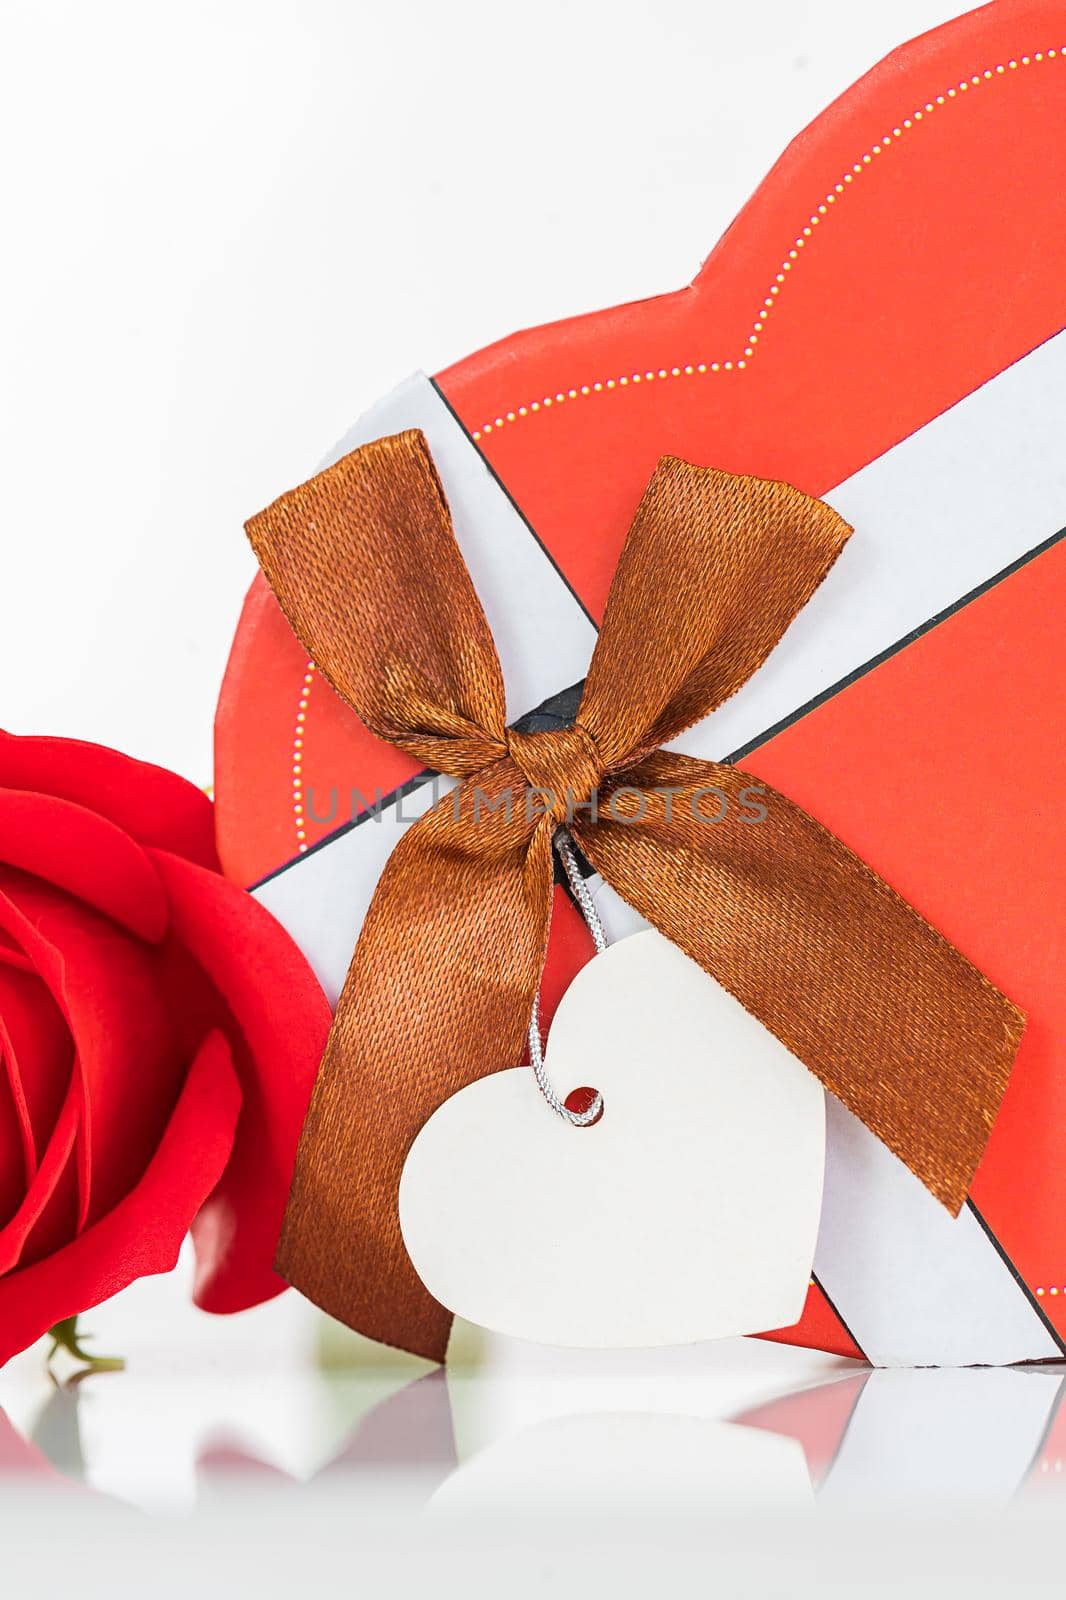 Close up red roses and heart-shaped box ,Valentine's Day concept with roses and red heart-shaped box